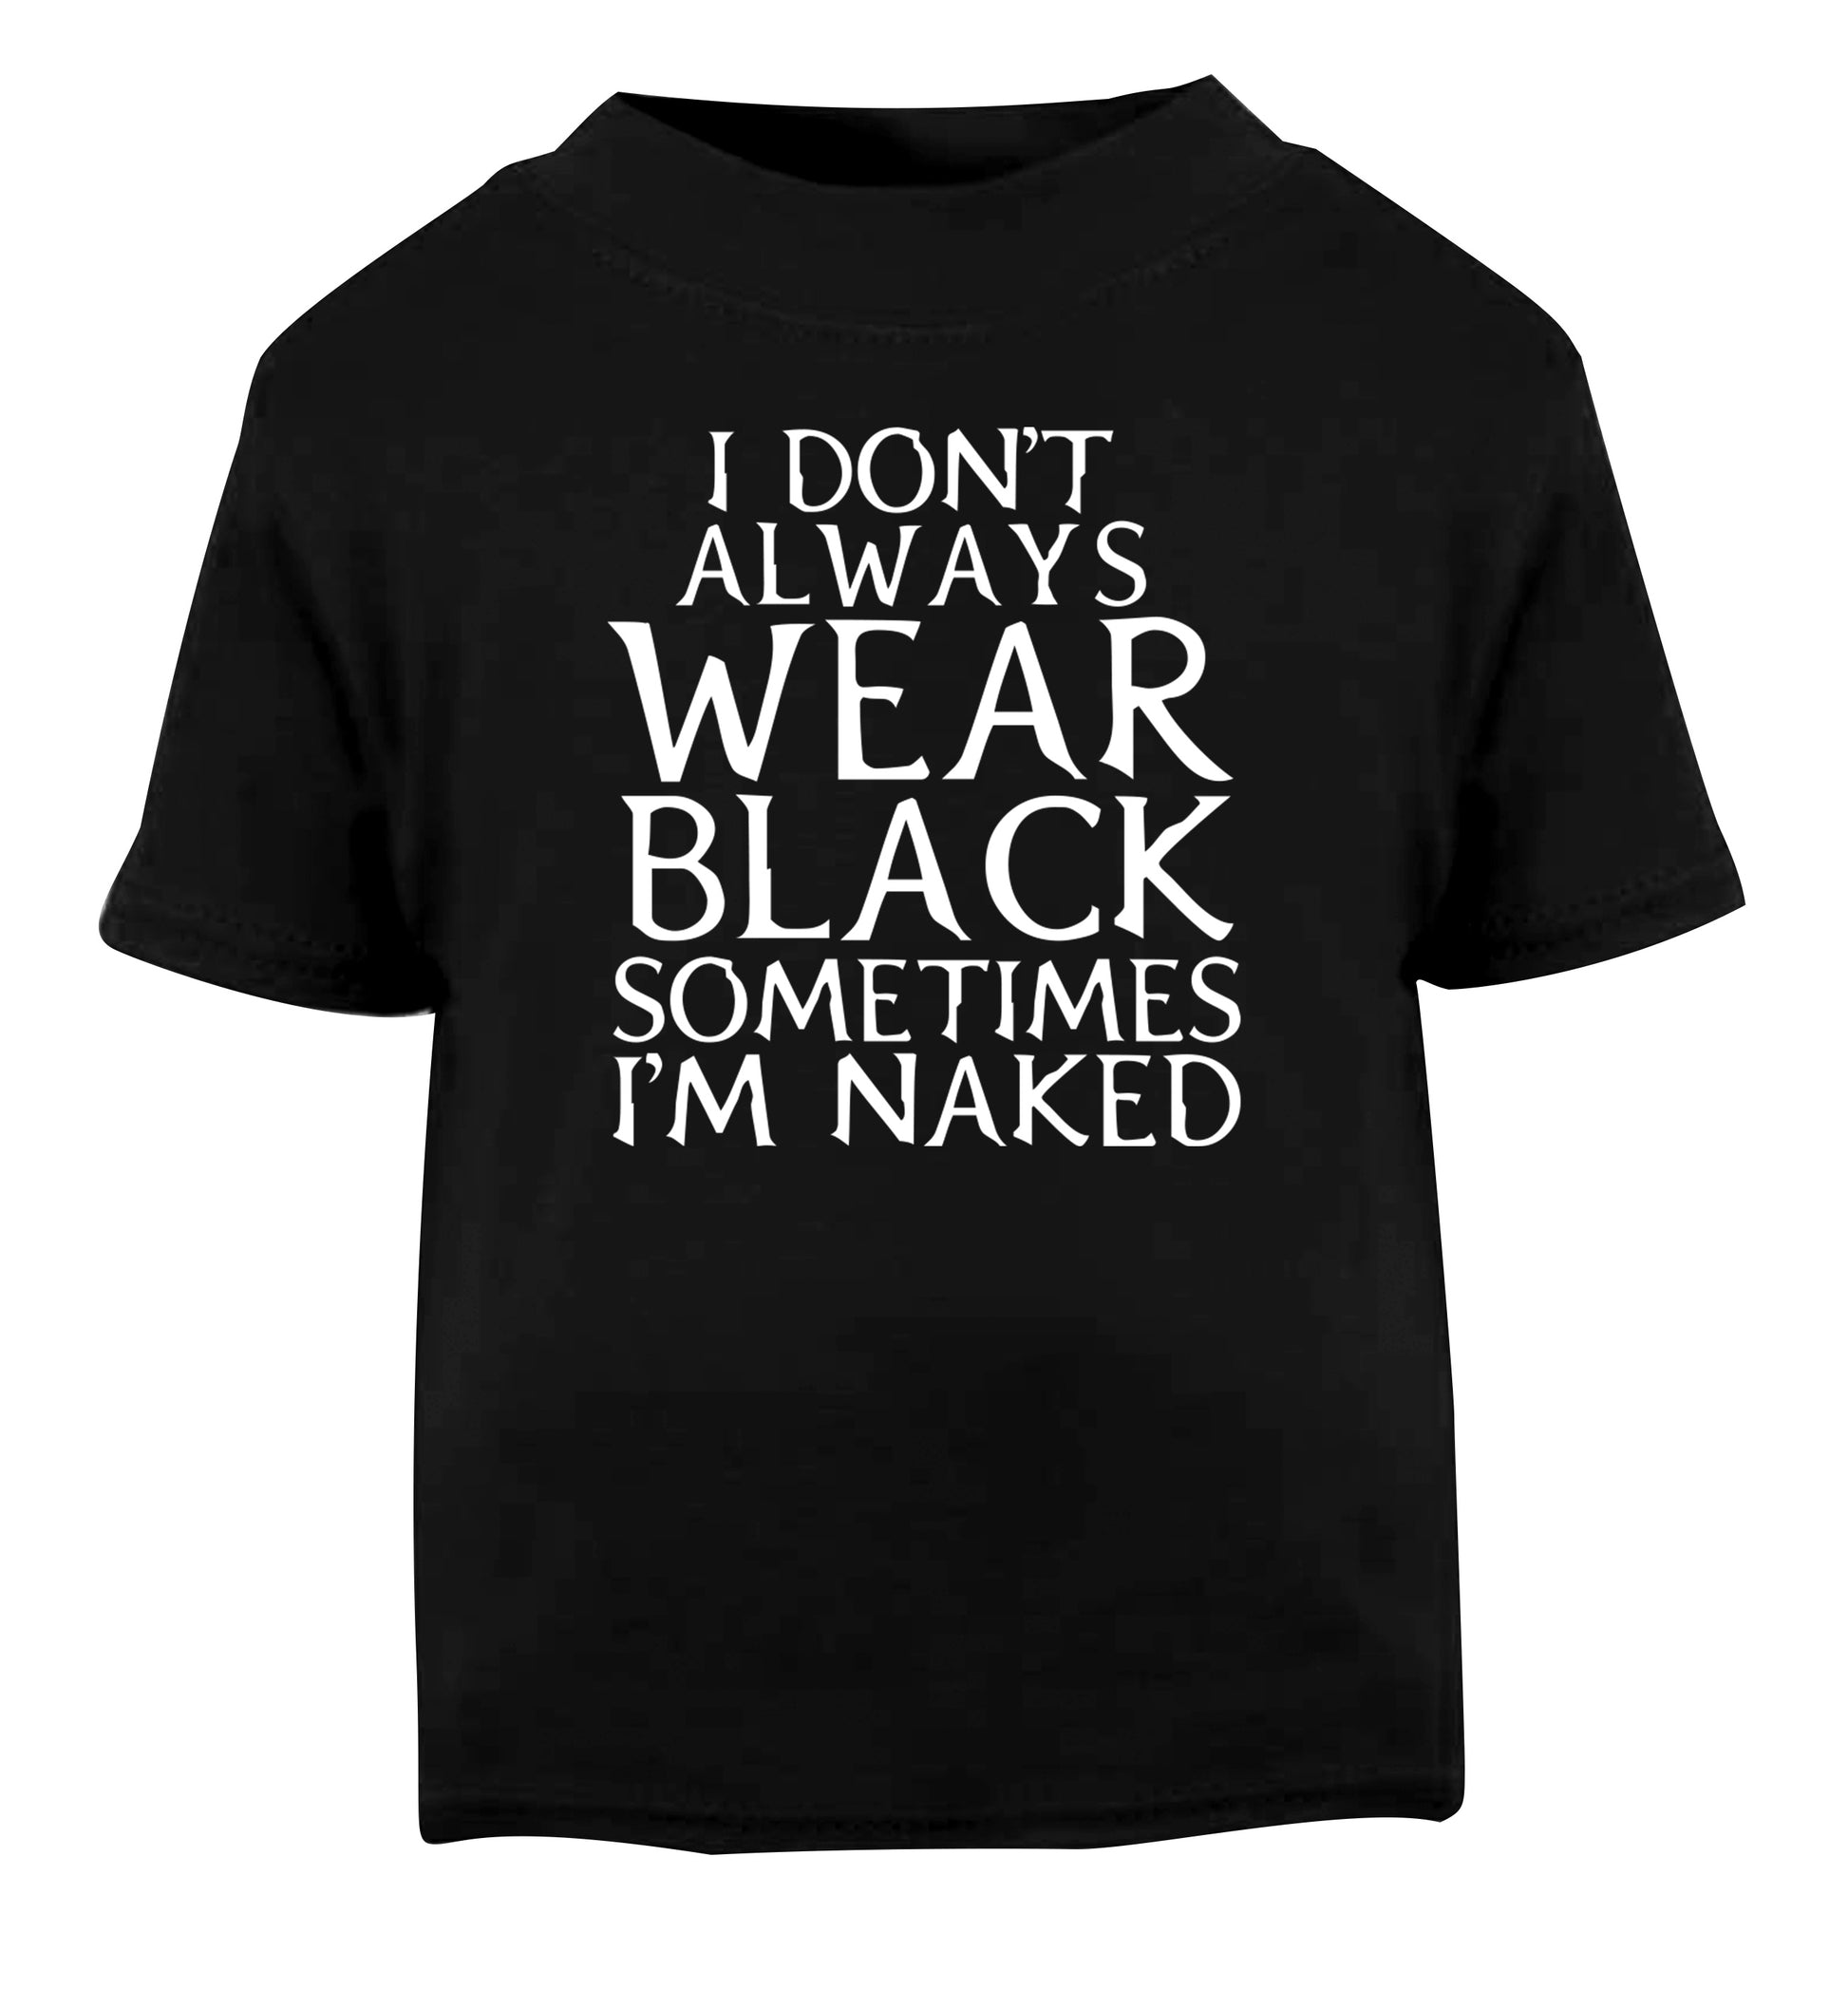 I don't always wear black sometimes I'm naked Black Baby Toddler Tshirt 2 years